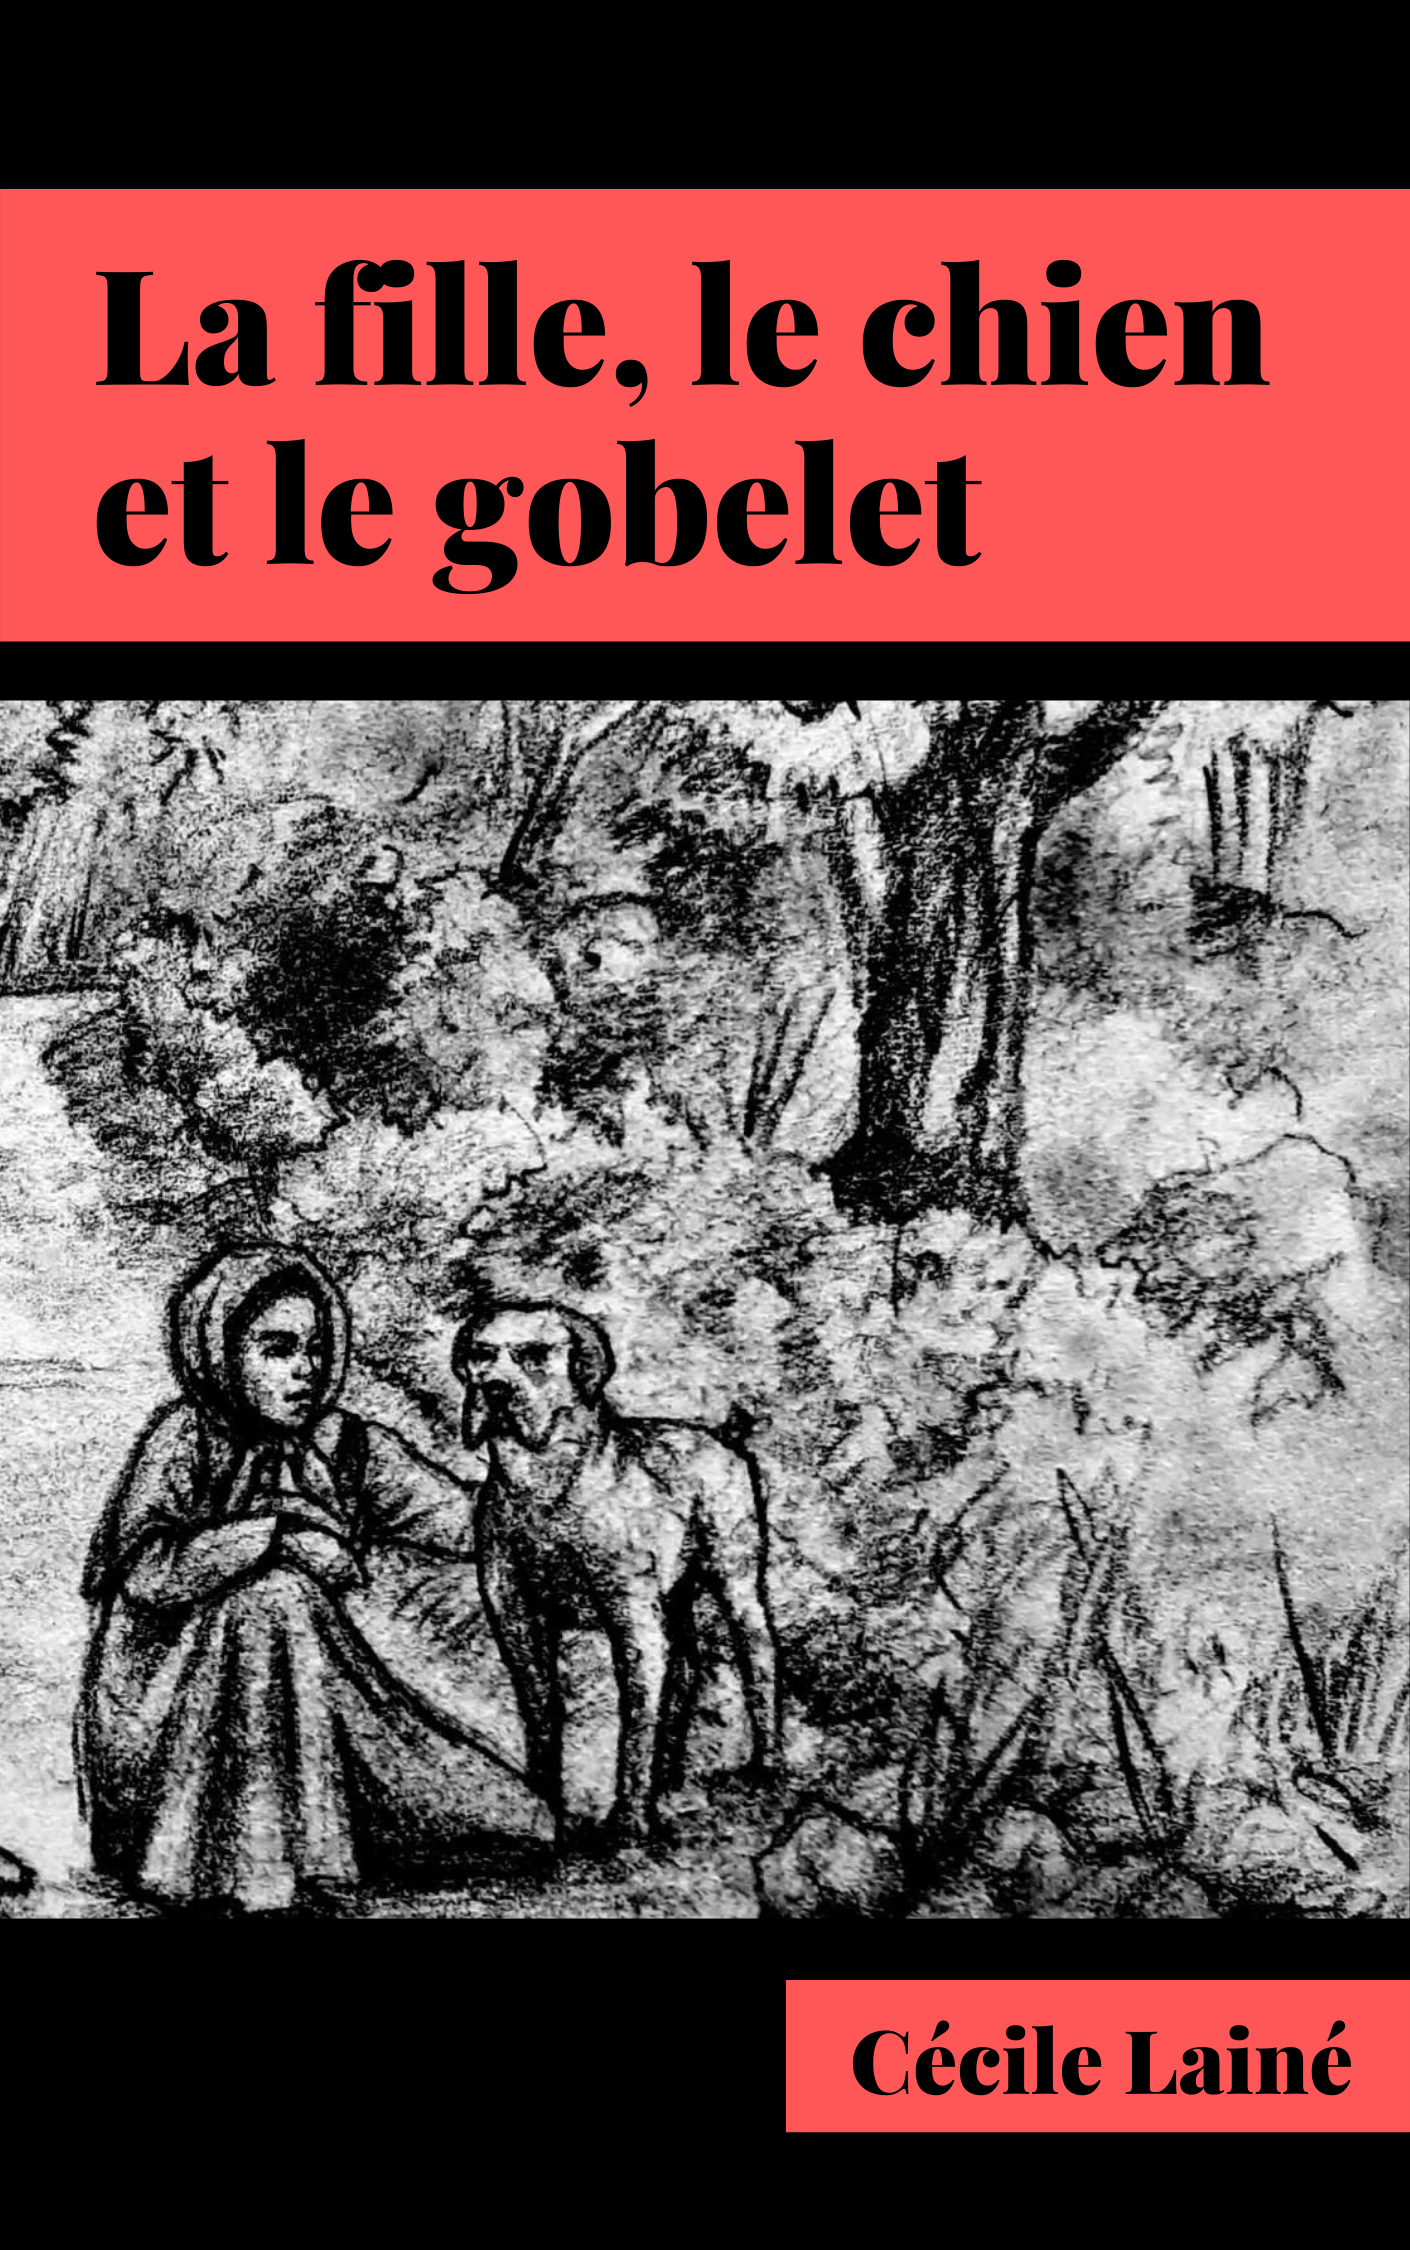 Introducing “La fille, le chien et le gobelet”, a historical fantasy novel for Intermediate students